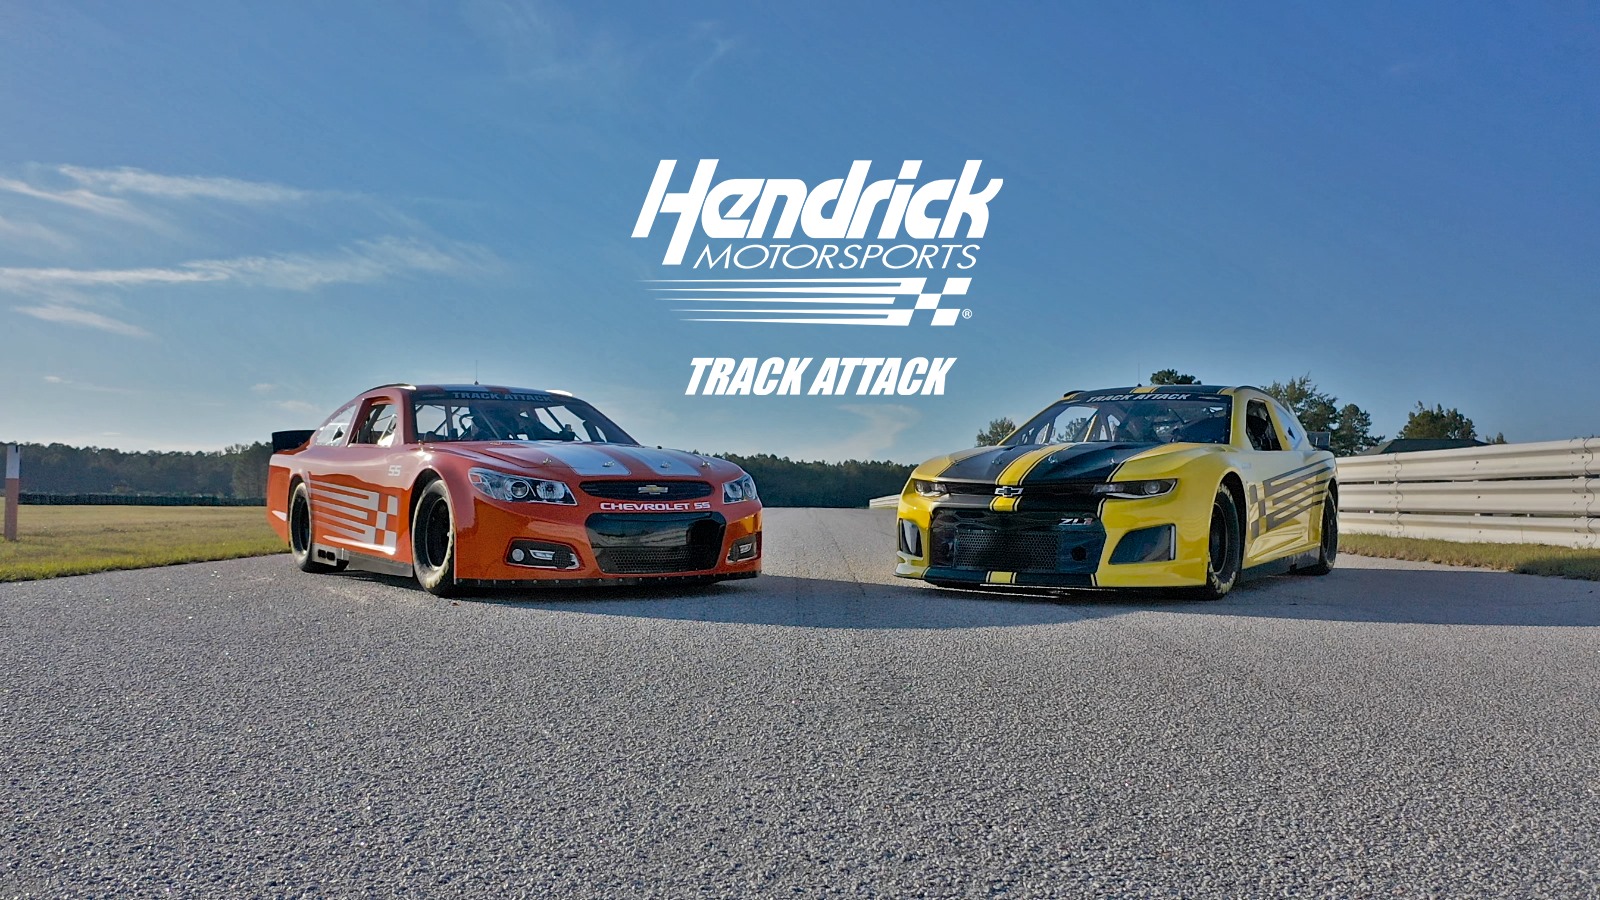 Hendrick Motorsports Reveals ‘Track Attack’ Car | THE SHOP